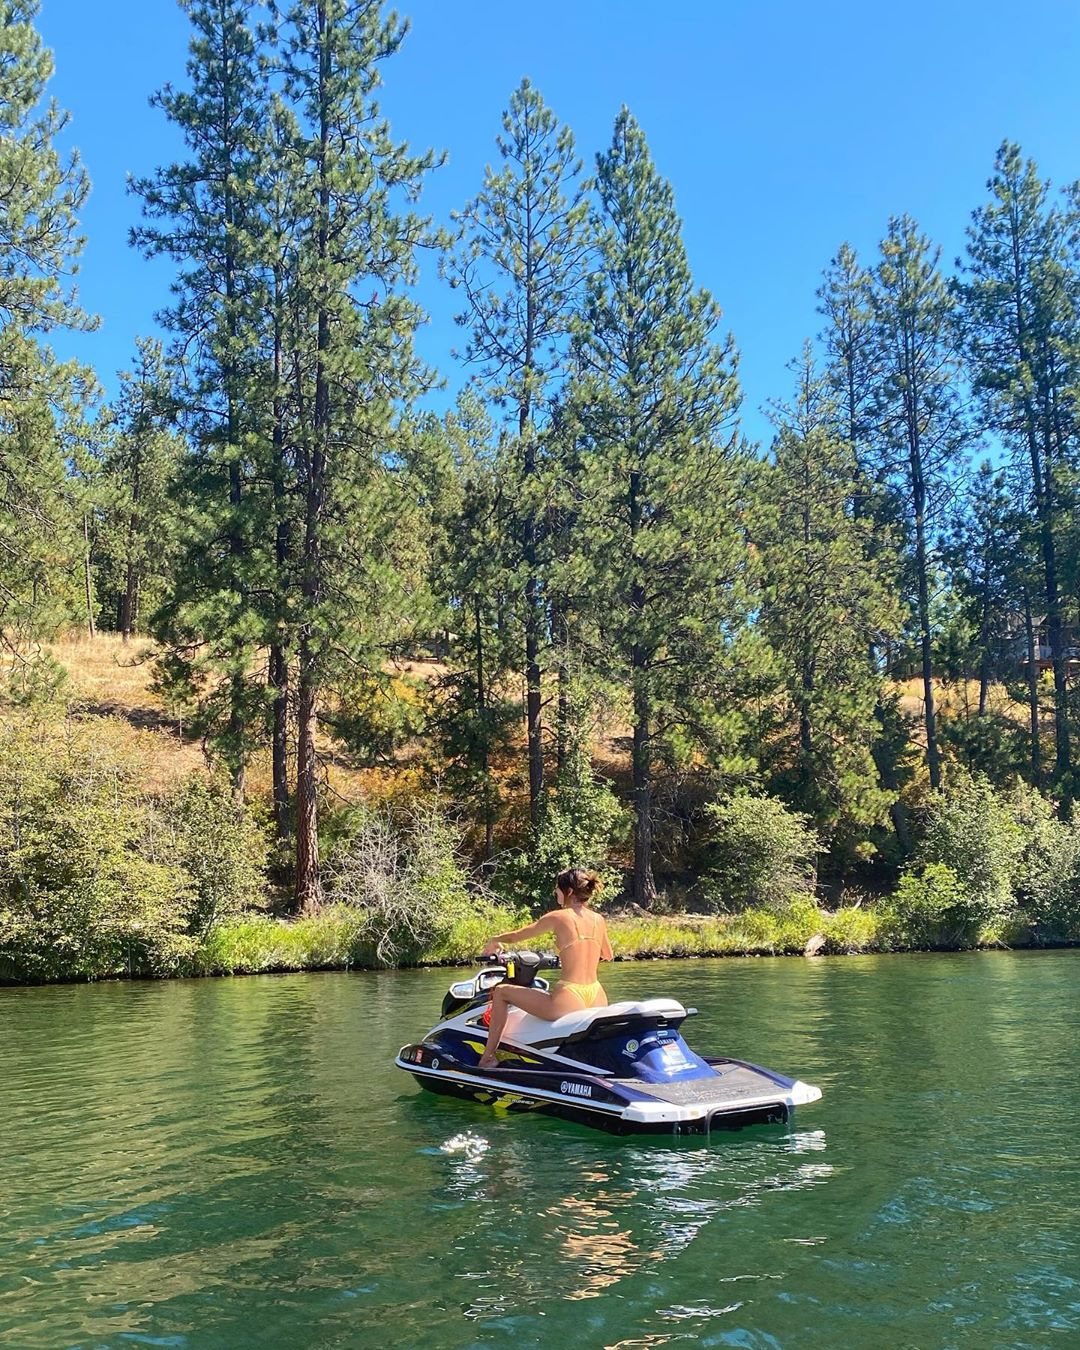 FOTOS ¡Kendall Jenner está en el lago!